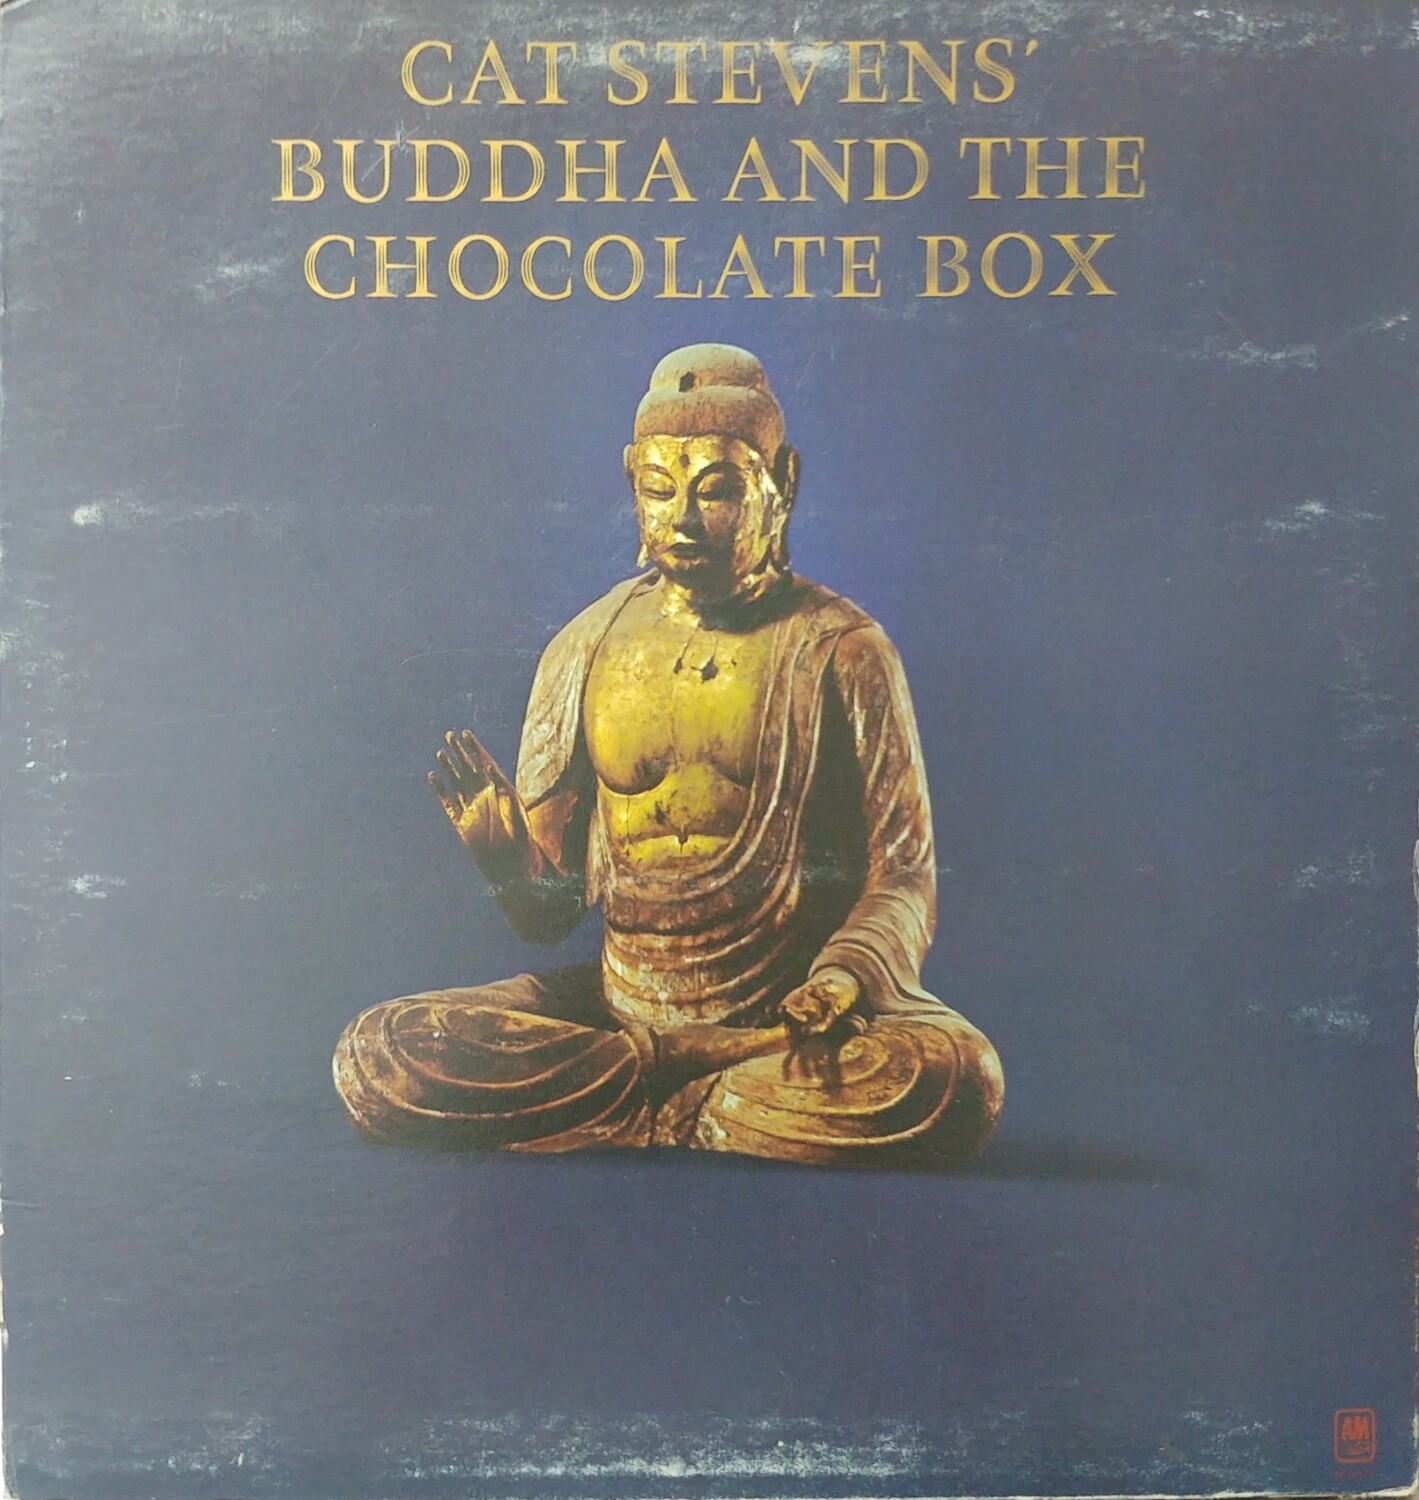 Cat Stevens - Buddha and the chocolate box